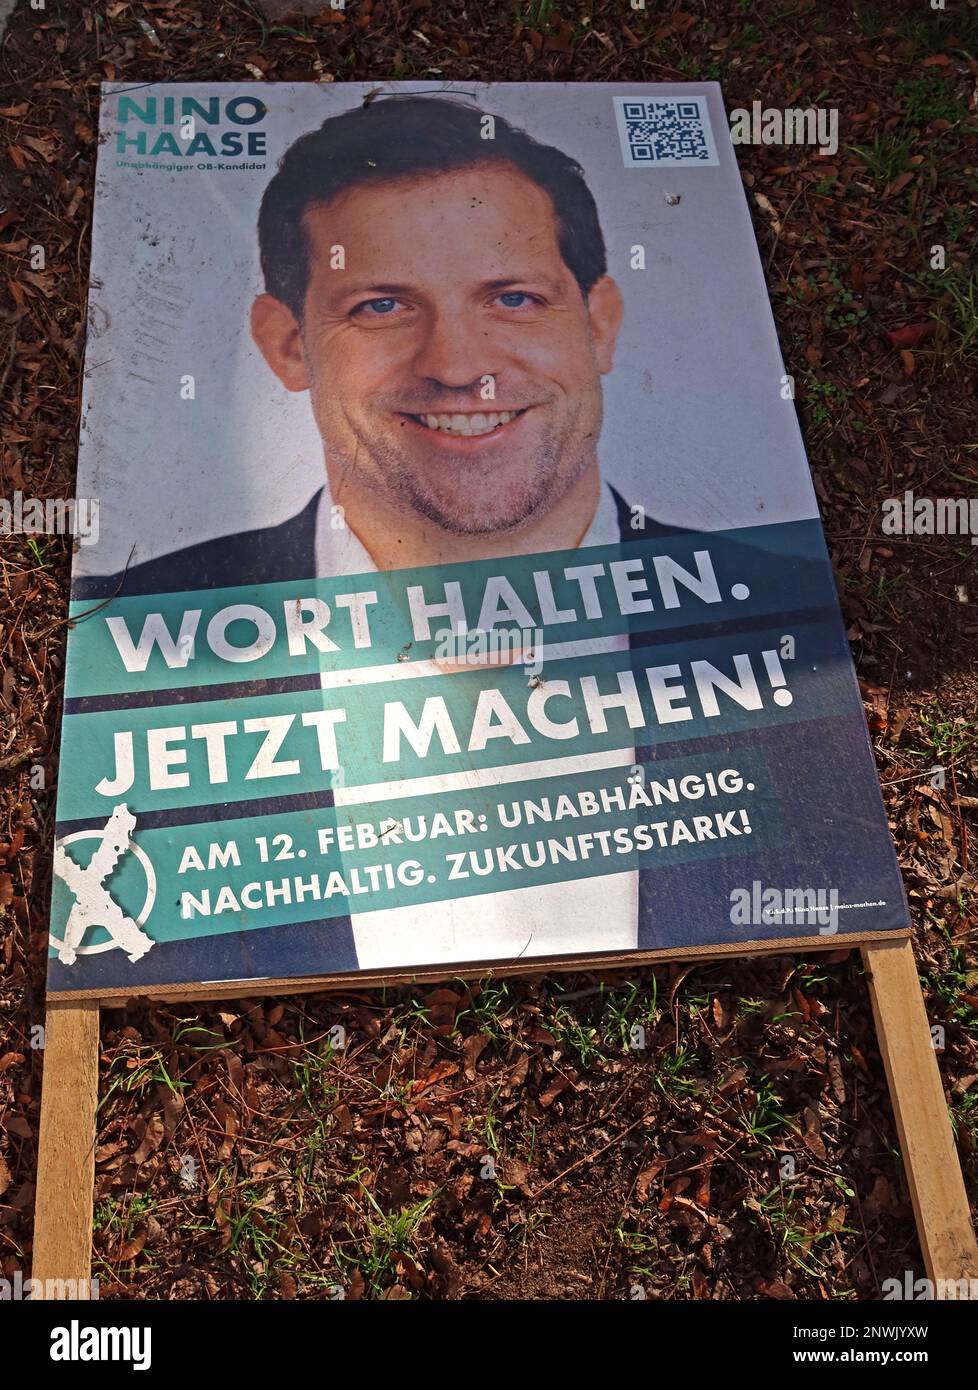 Mayoral campaign poster for non-party Nino Haase, Feb 2023 OB-Kandidat fur Mainz, Unabhangiger, Mainz-Machen.de, Rhineland-Palatinate Stock Photo